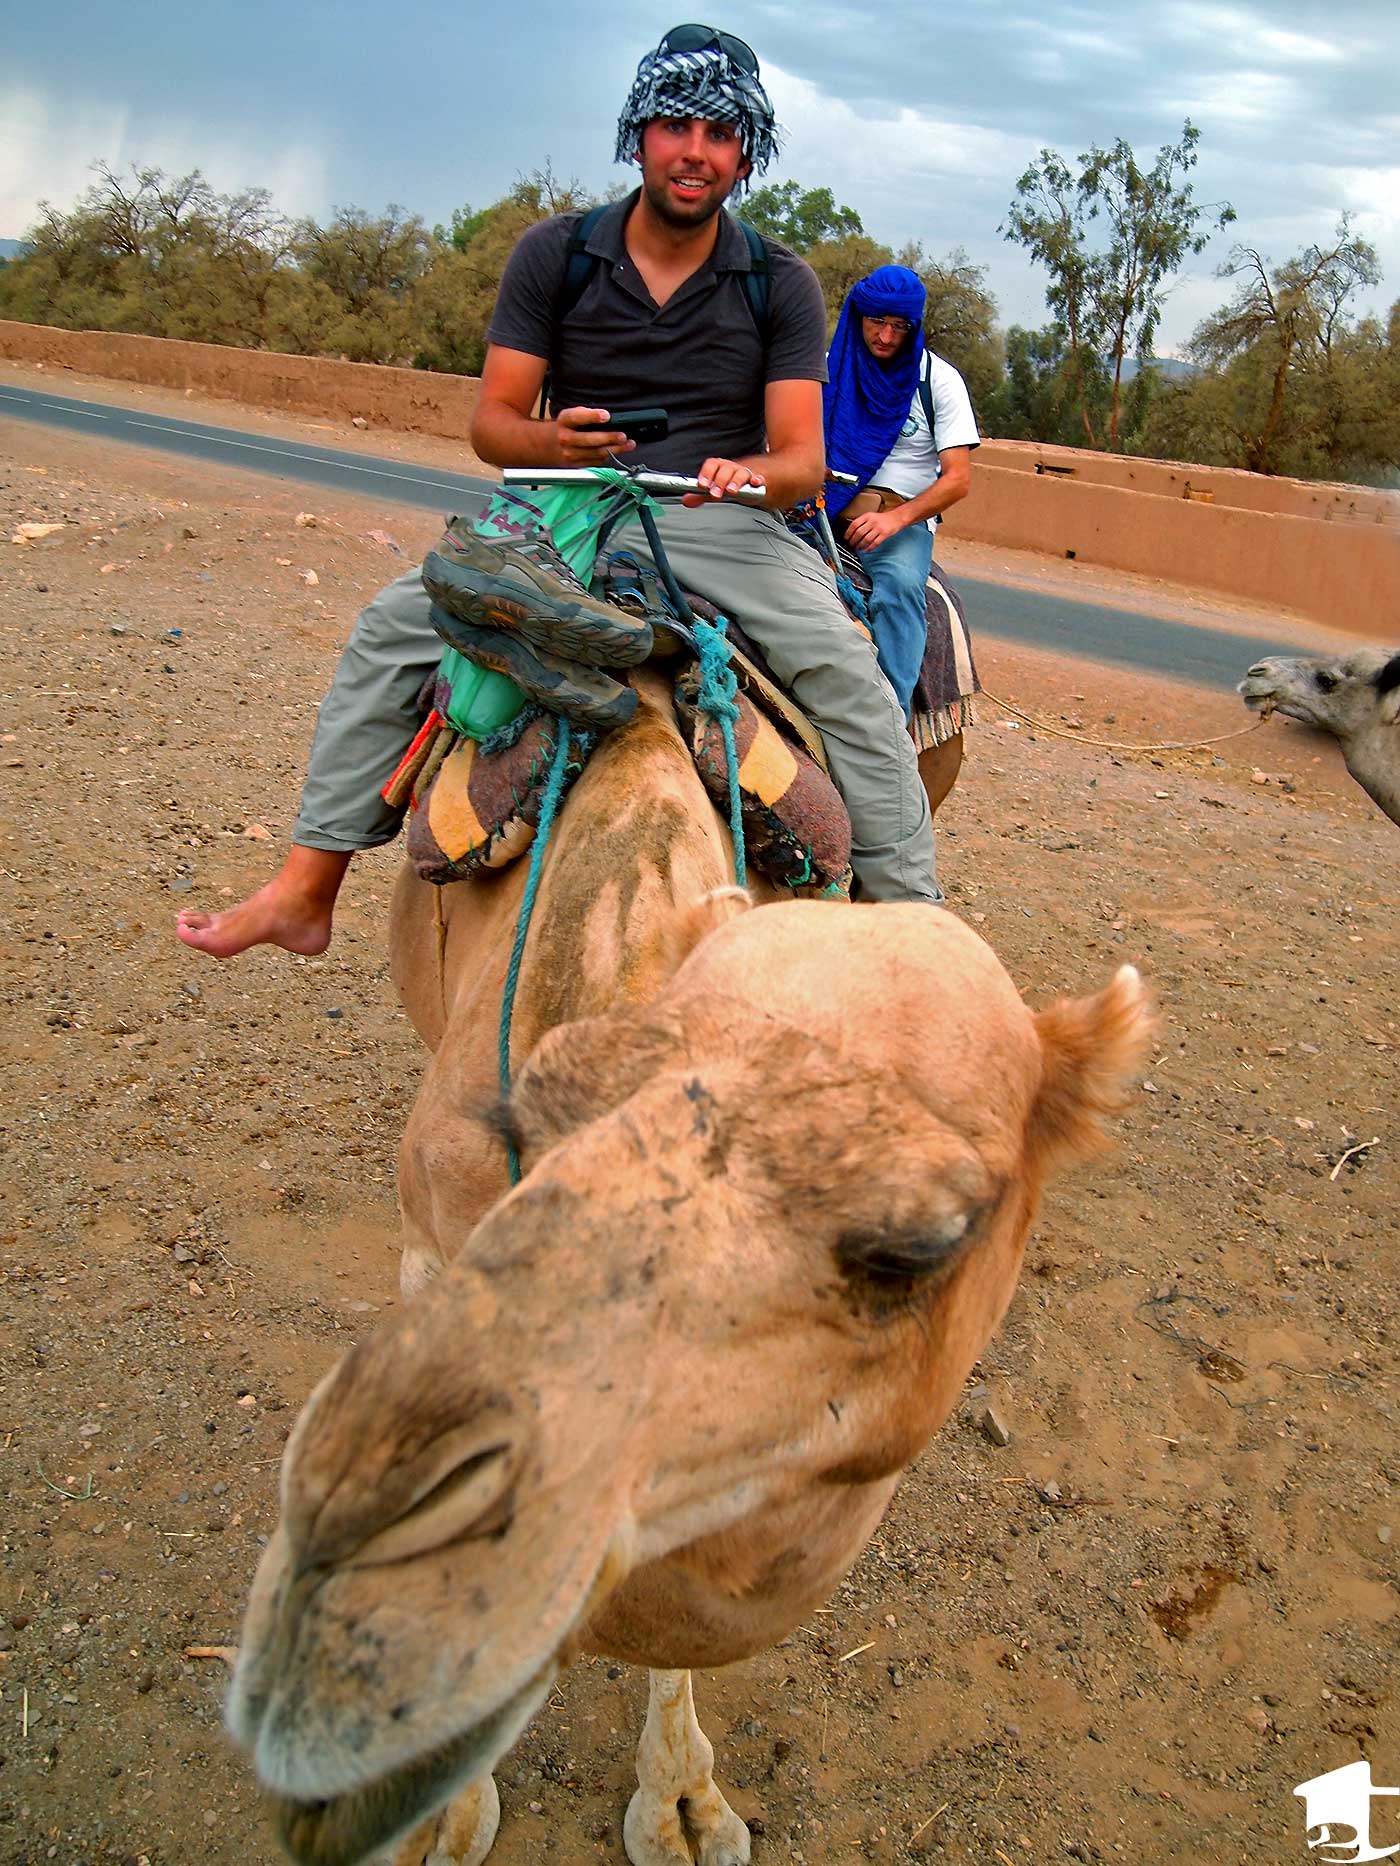 Riding a camel into the Sahara